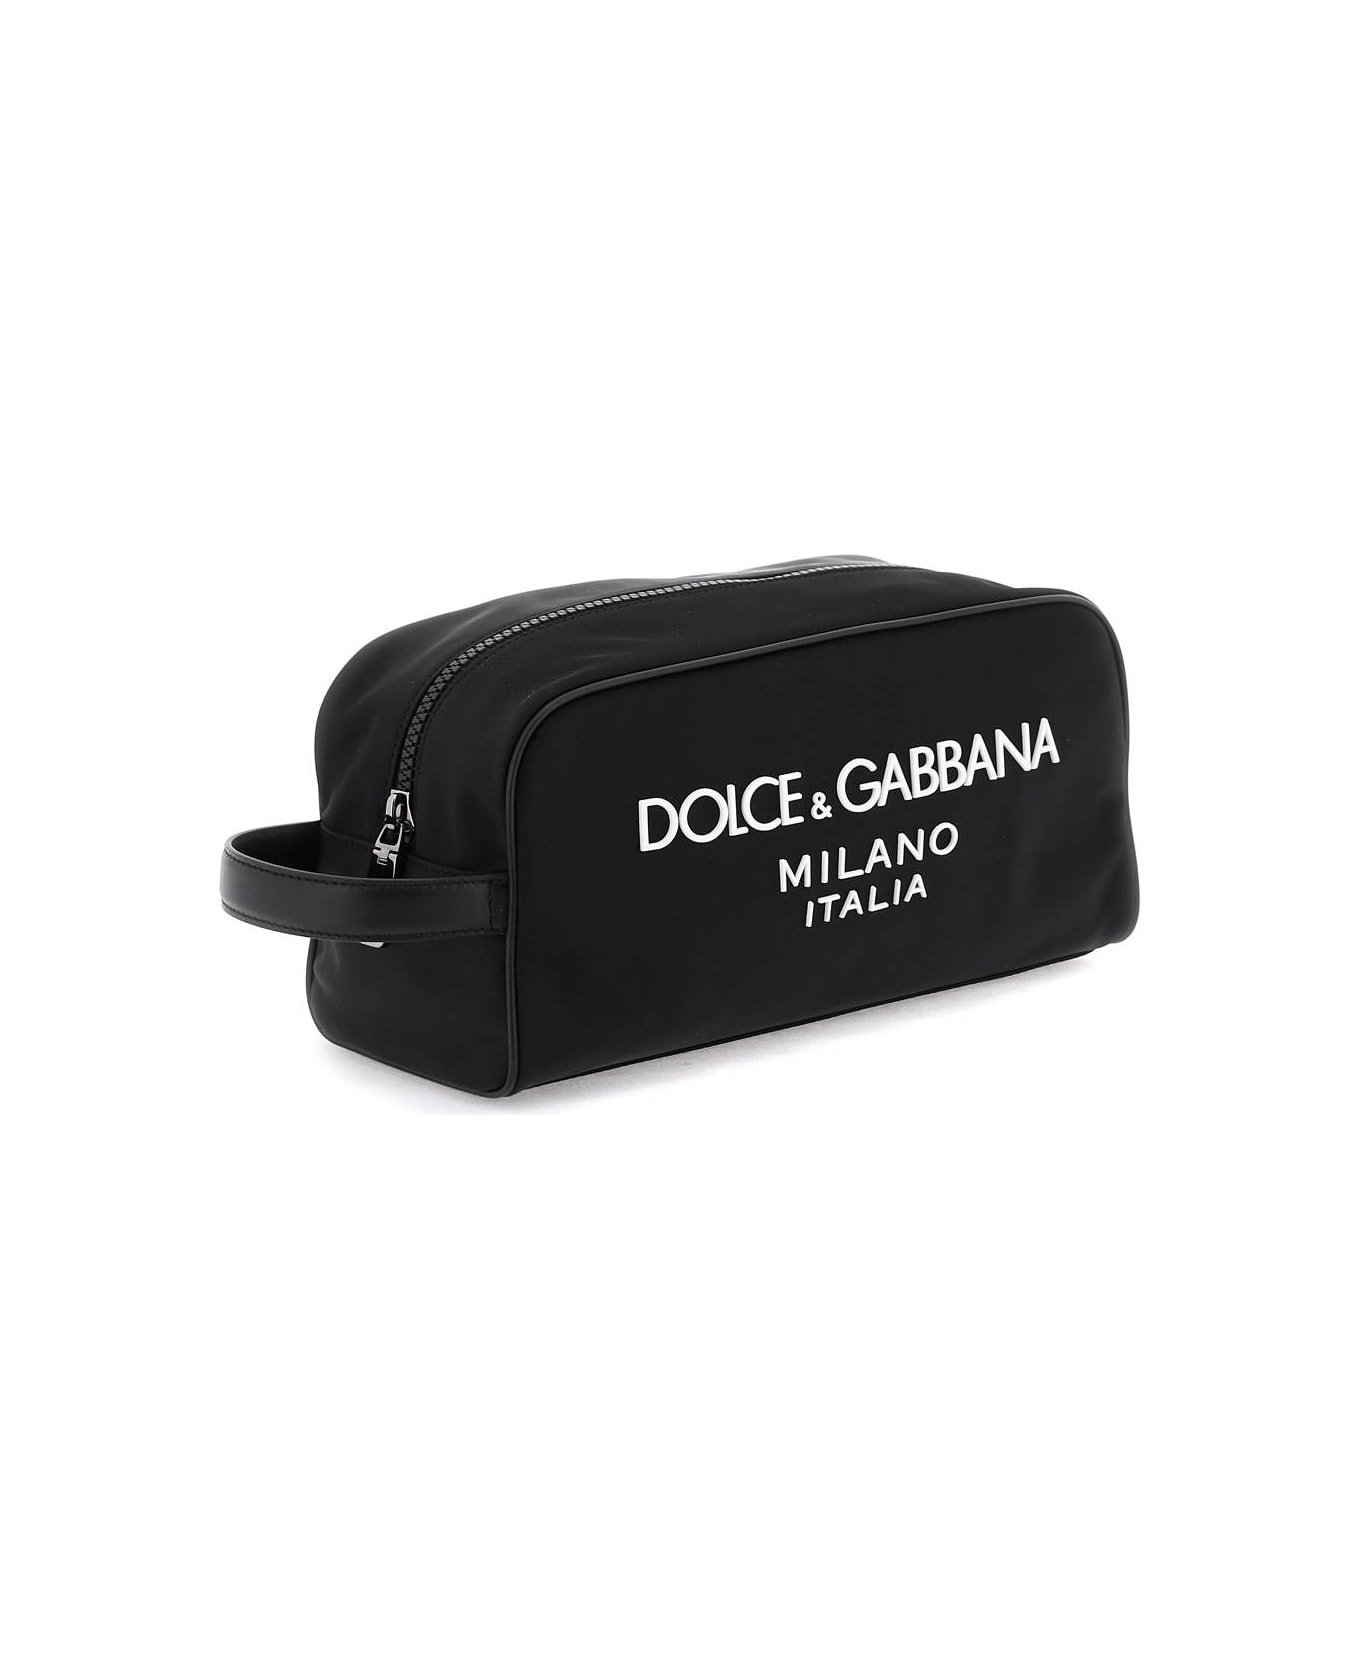 Dolce & Gabbana Nylon Cosmetic Bag - Nero/nero バッグ